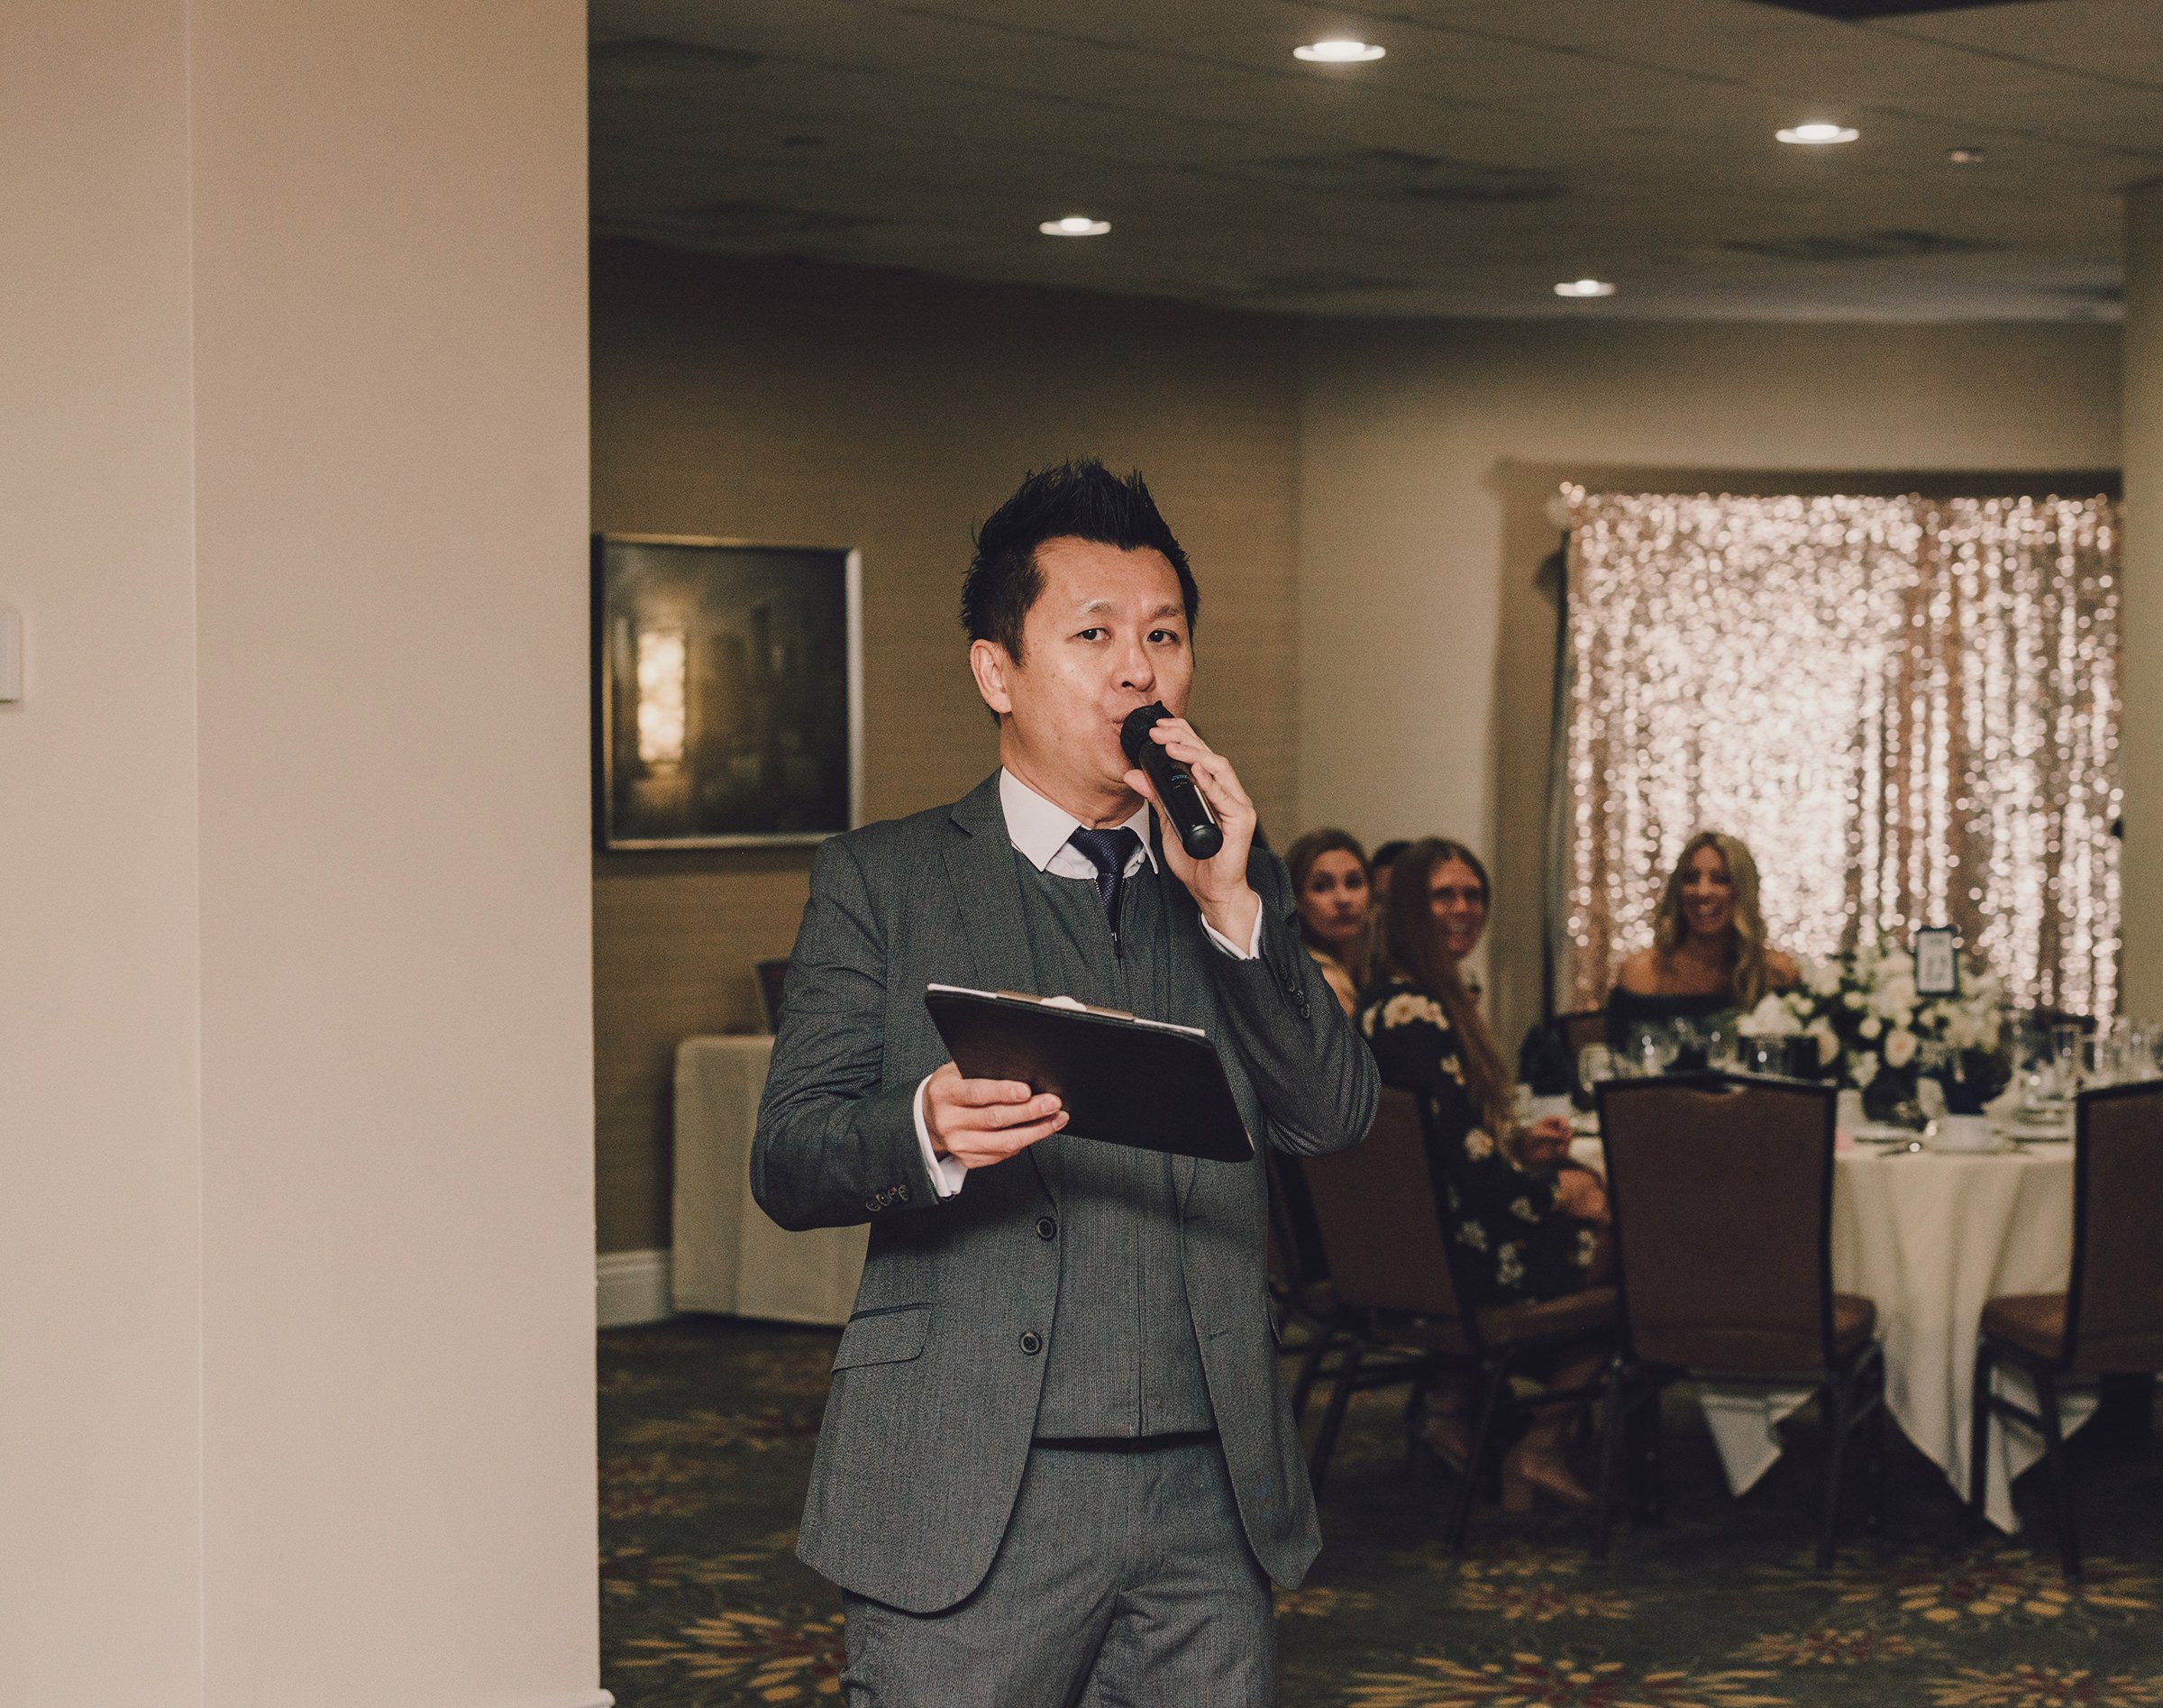 modern-asian-american-wedding-reception-doubletree-hilton-downtown-los-angeles-socal-photographer.jpg